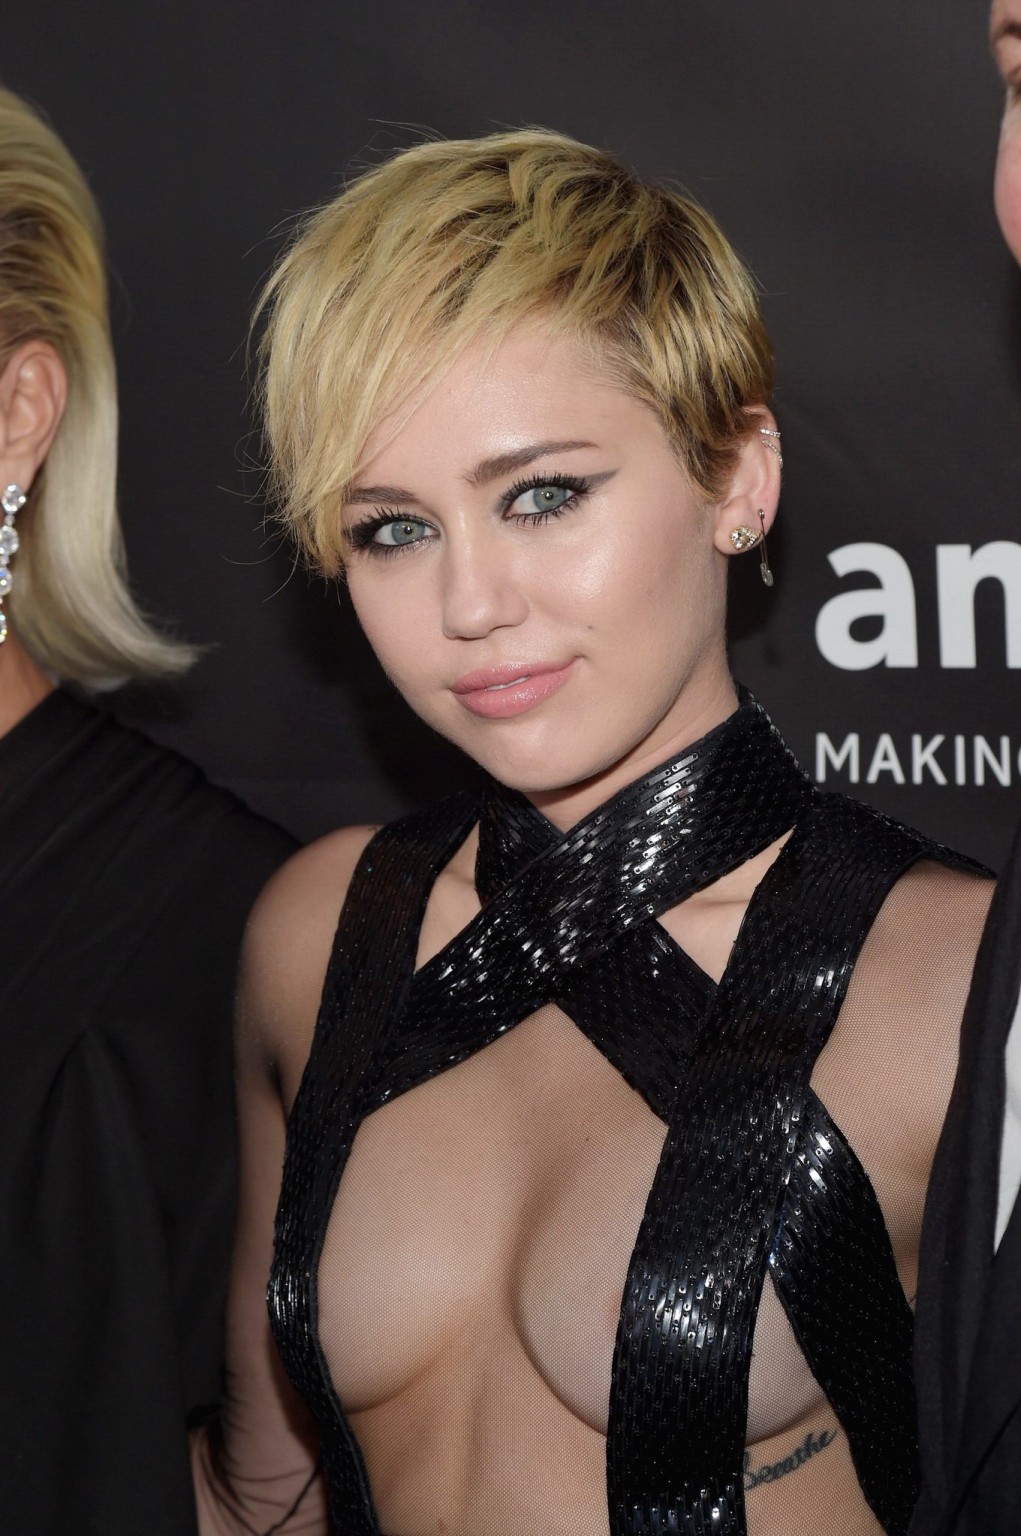 Miley cyrus seethru abdeckung nur brustwarzen bei amfar la inspiration 2014 gala in h
 #75182747